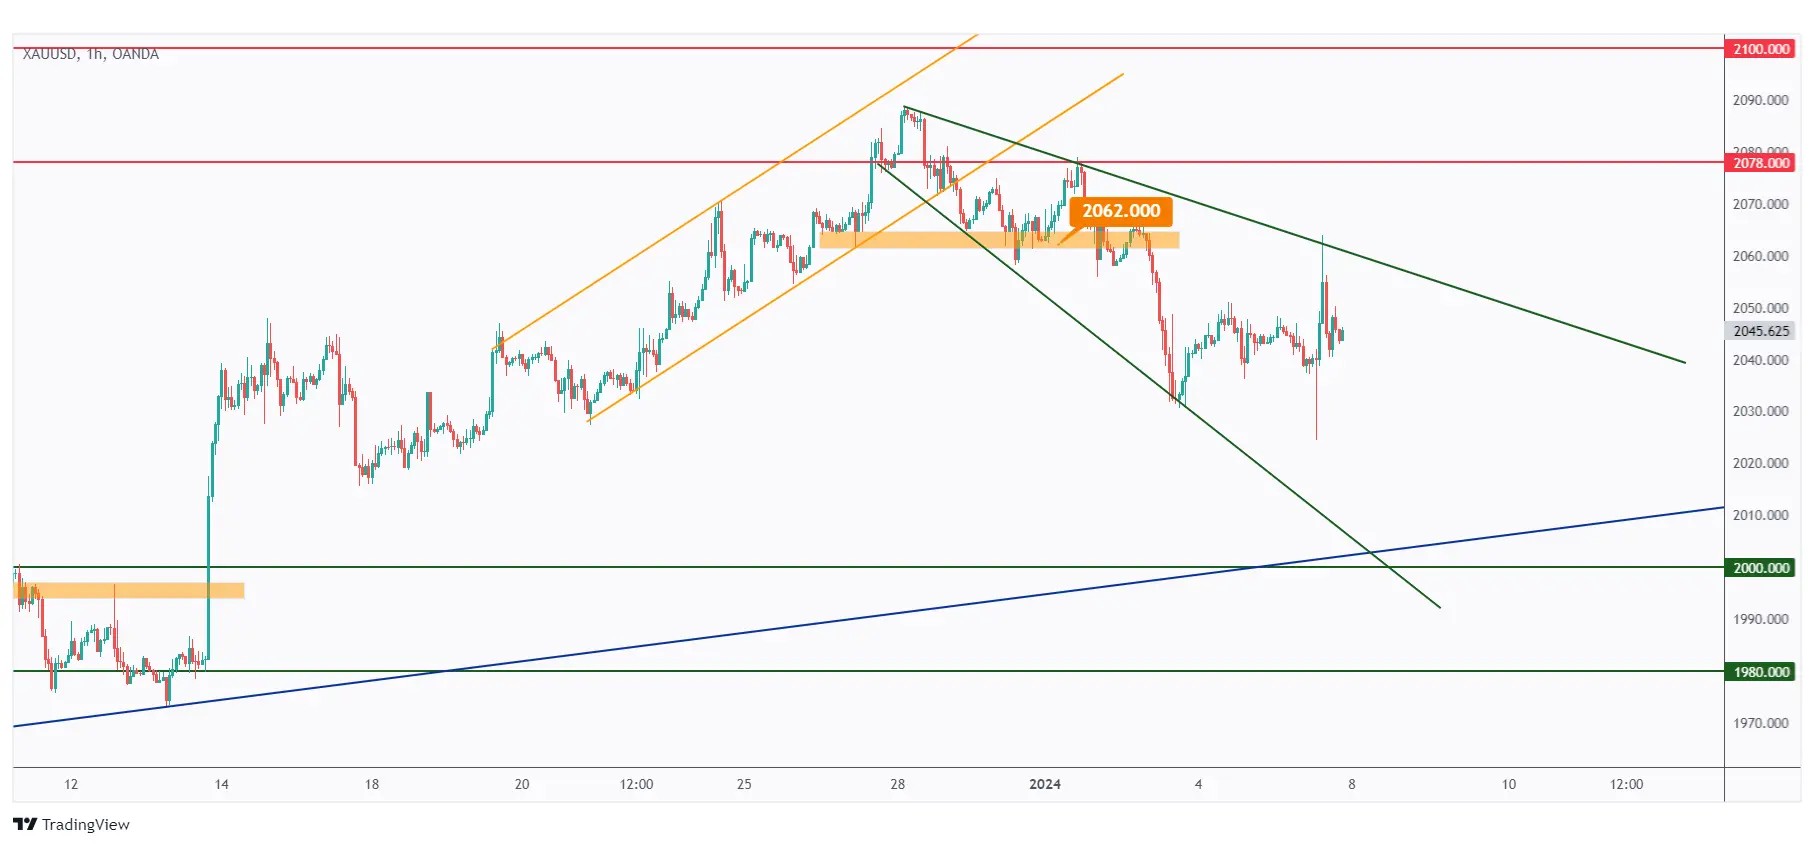 gold 1h chart bearish trading inside a falling wedge pattern.